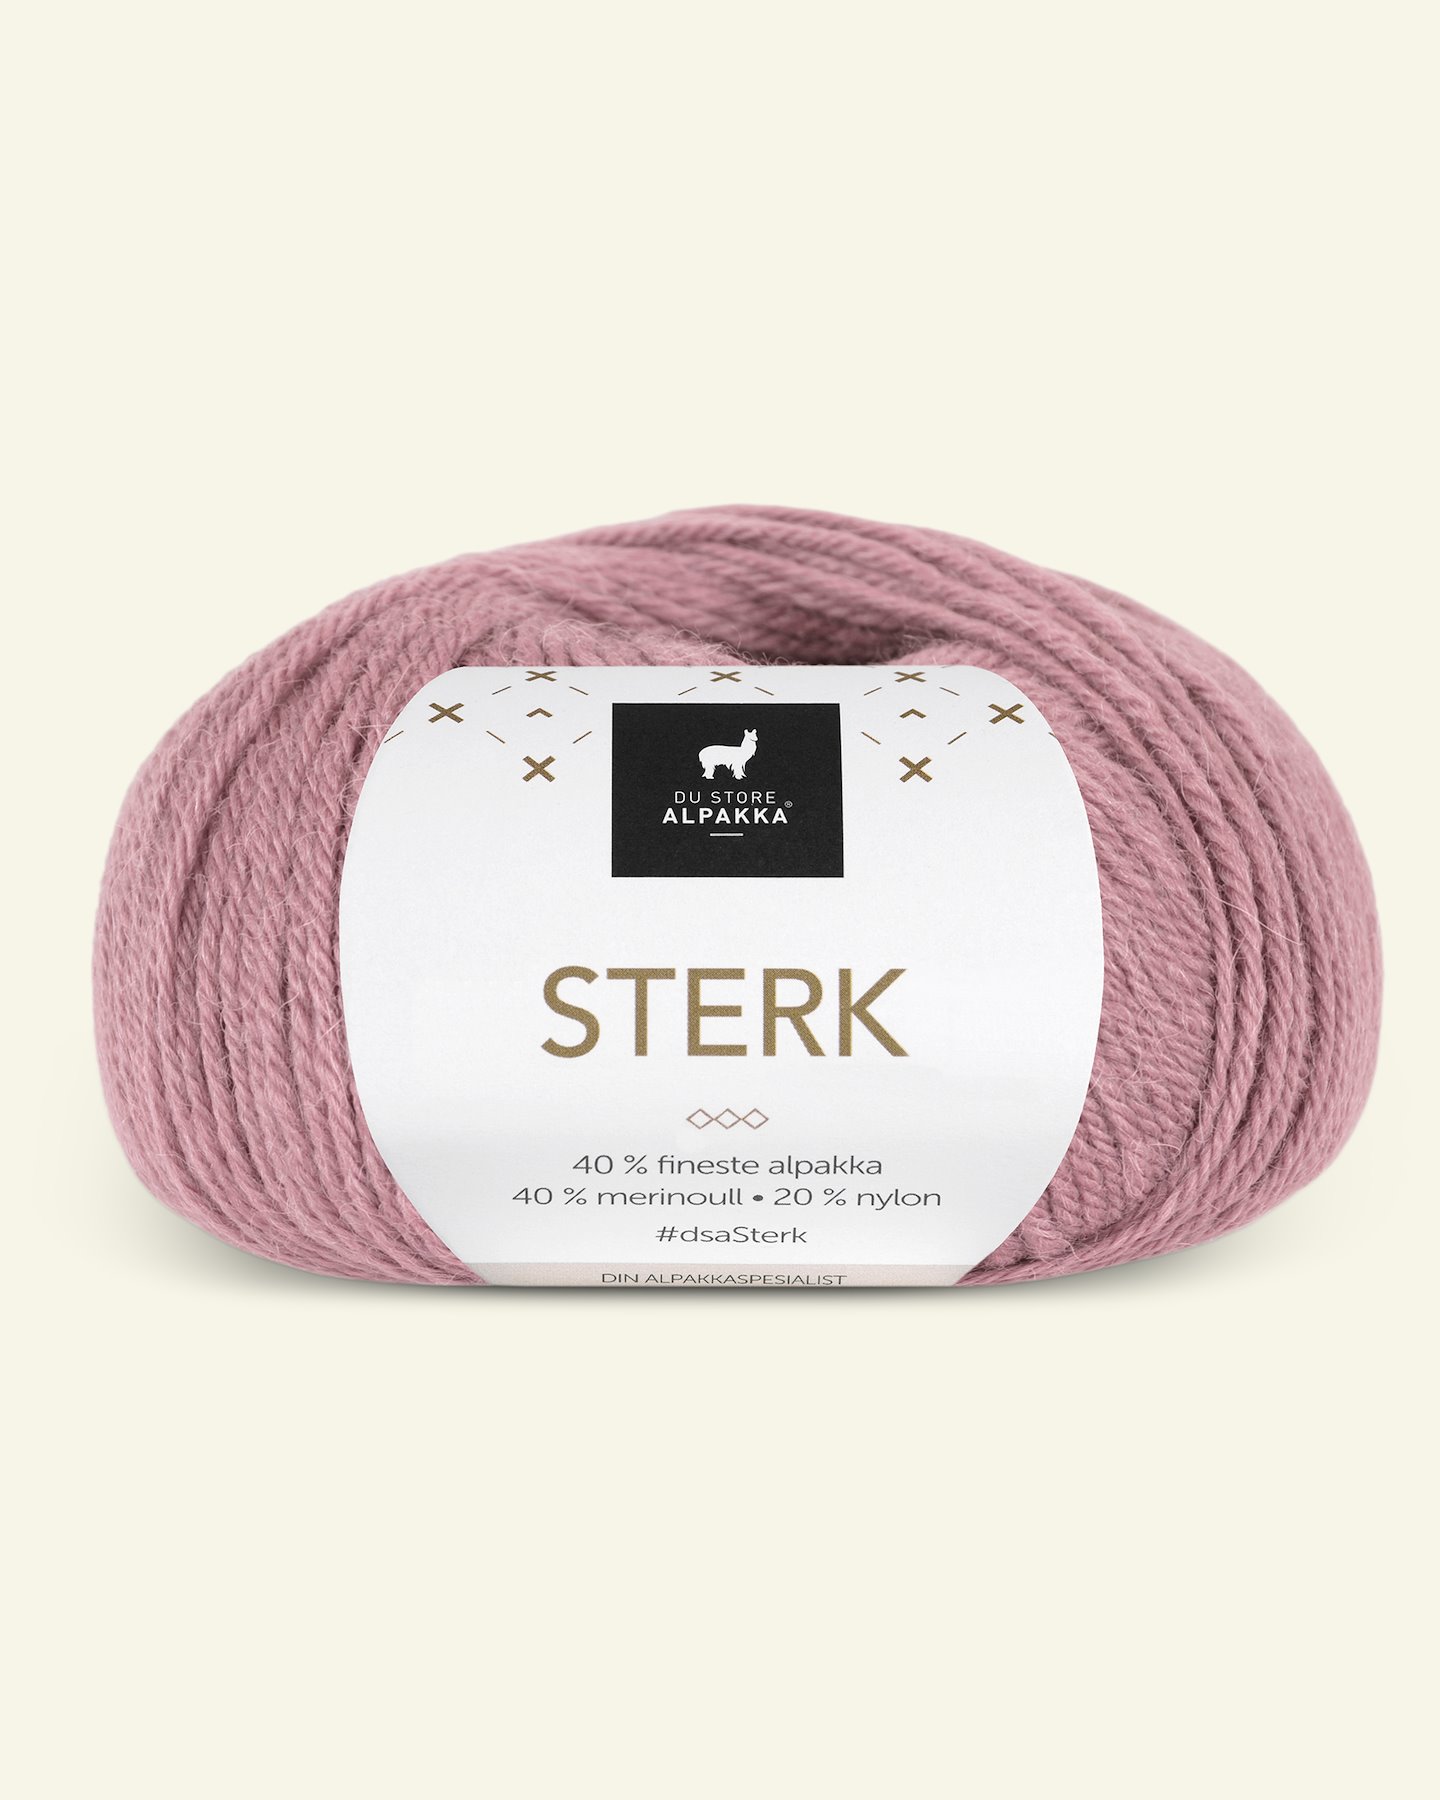 Du Store Alpakka, alpaca merino mixgarn "Sterk", mørk støvet rosa (899) 90000693_pack